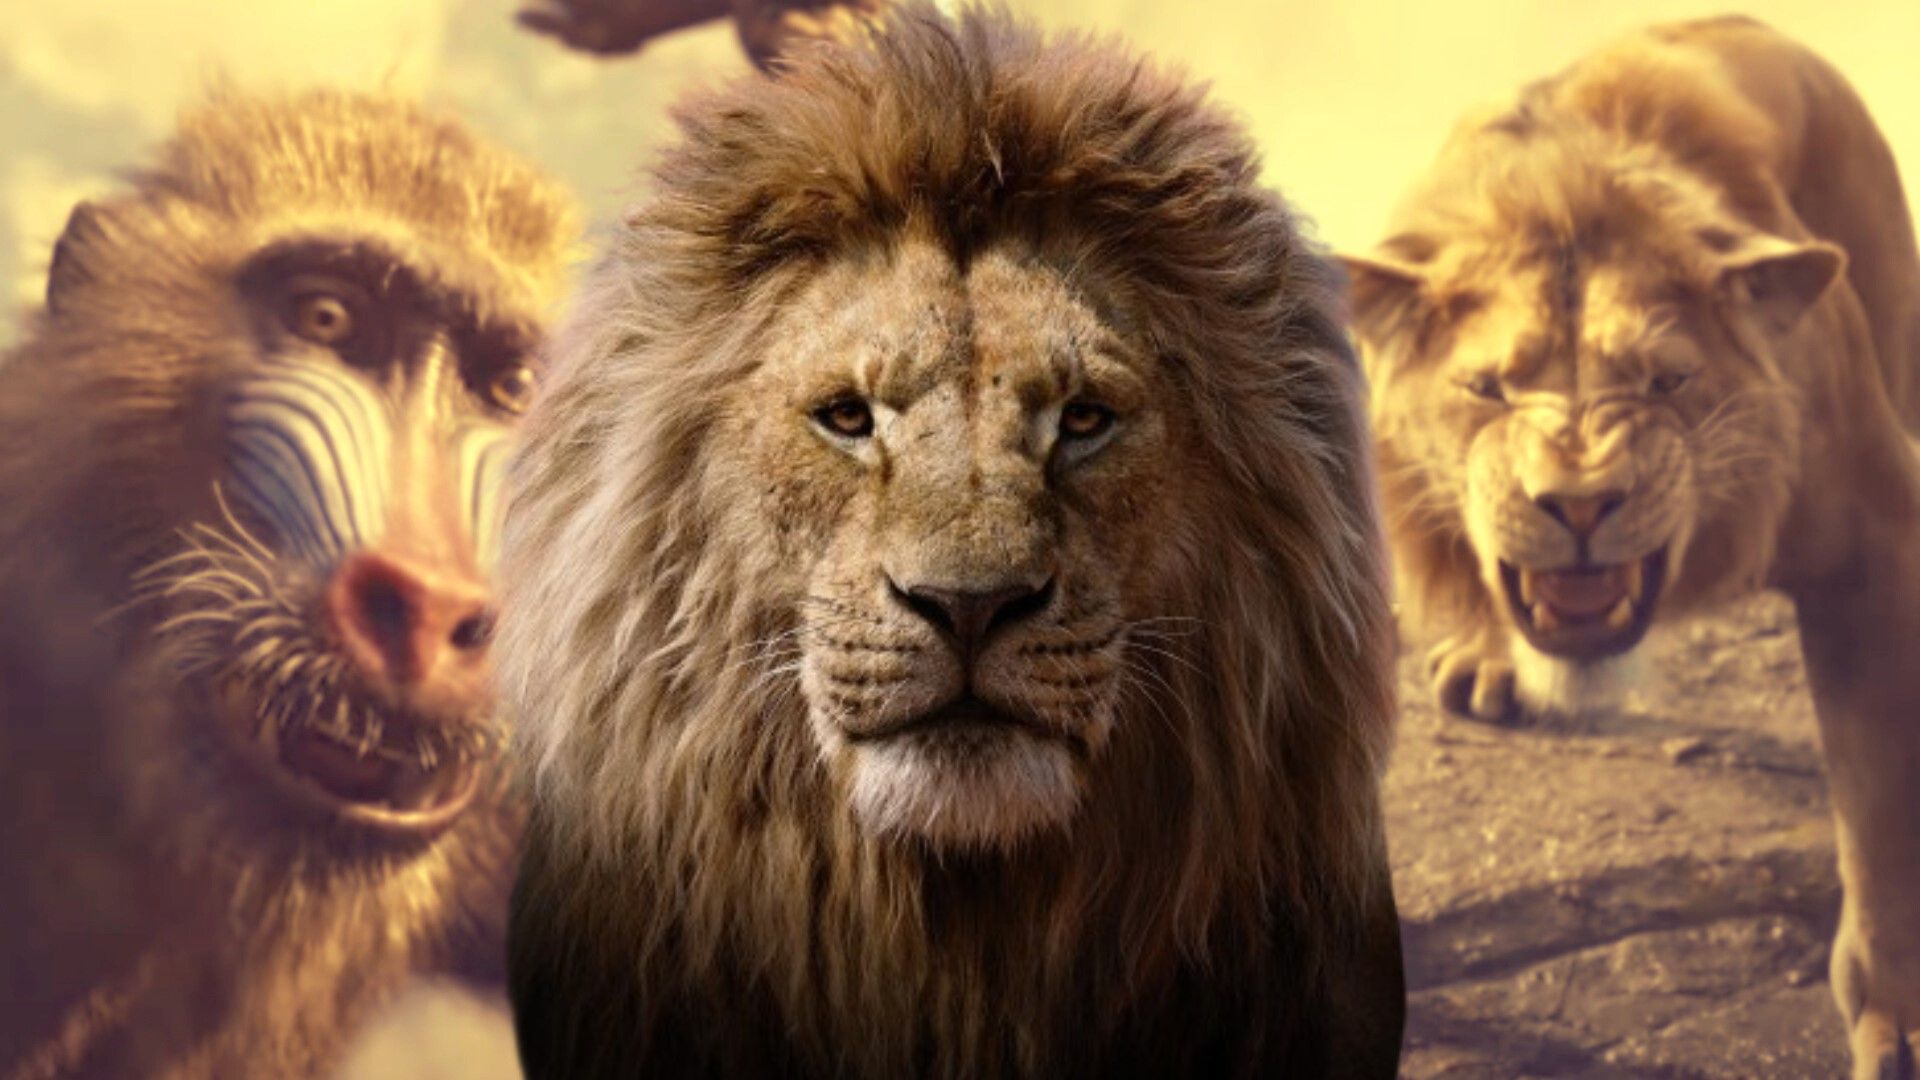 Stills from Mufasa: The Lion King.